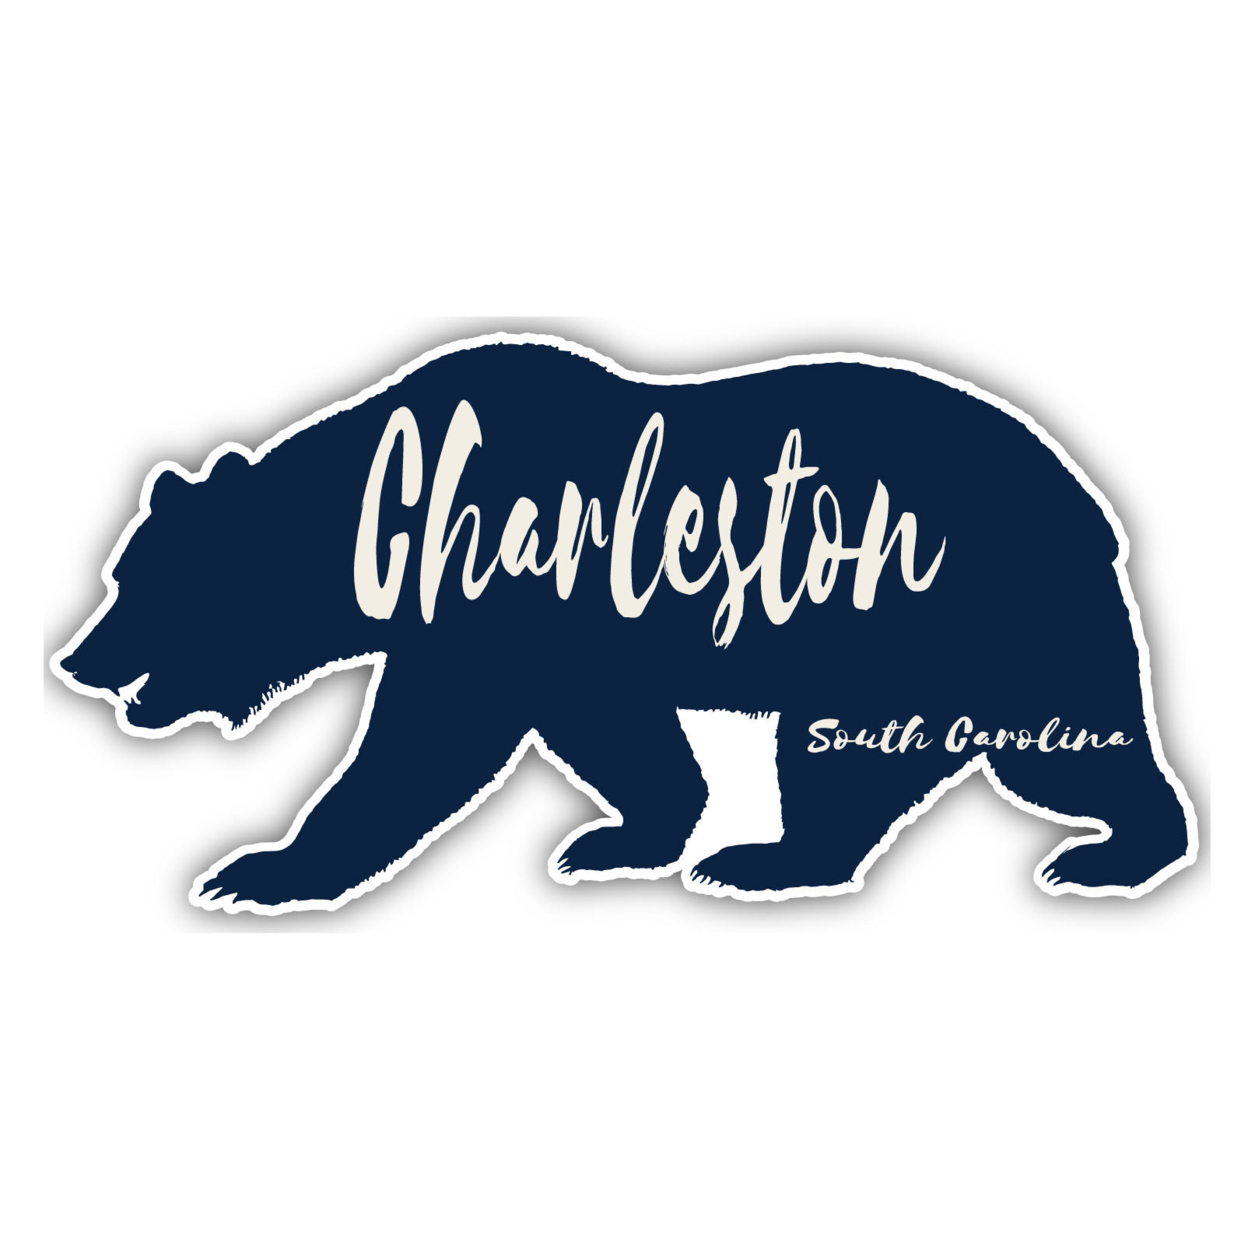 Charleston South Carolina Souvenir Decorative Stickers (Choose Theme And Size) - 4-Pack, 6-Inch, Adventures Awaits